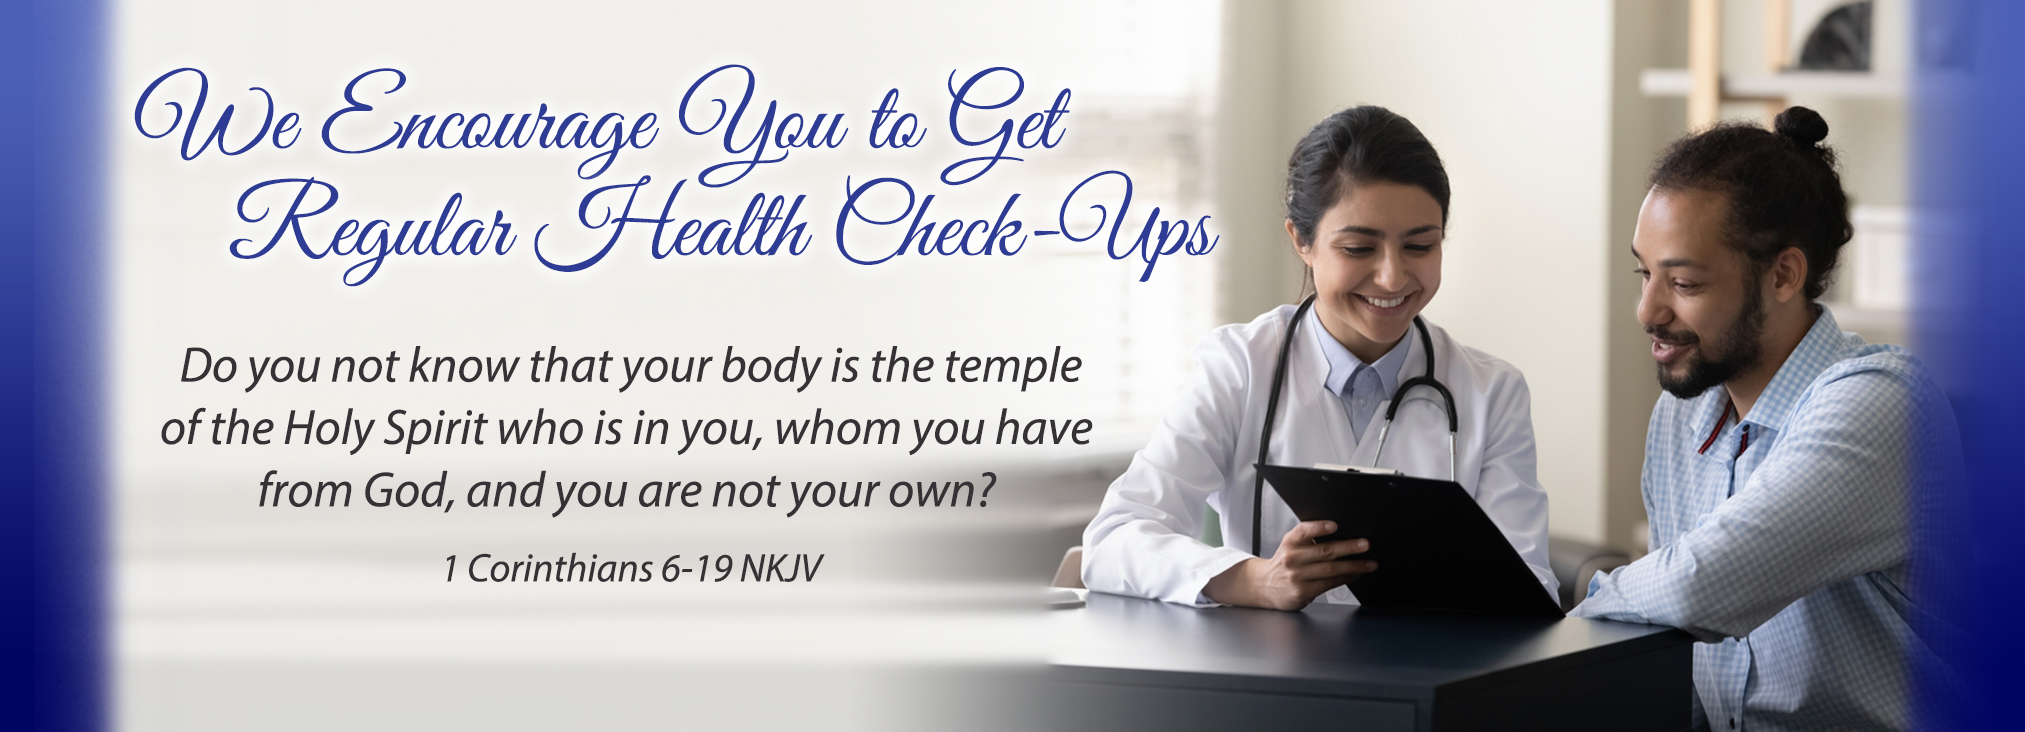 Regular Health Check-Ups